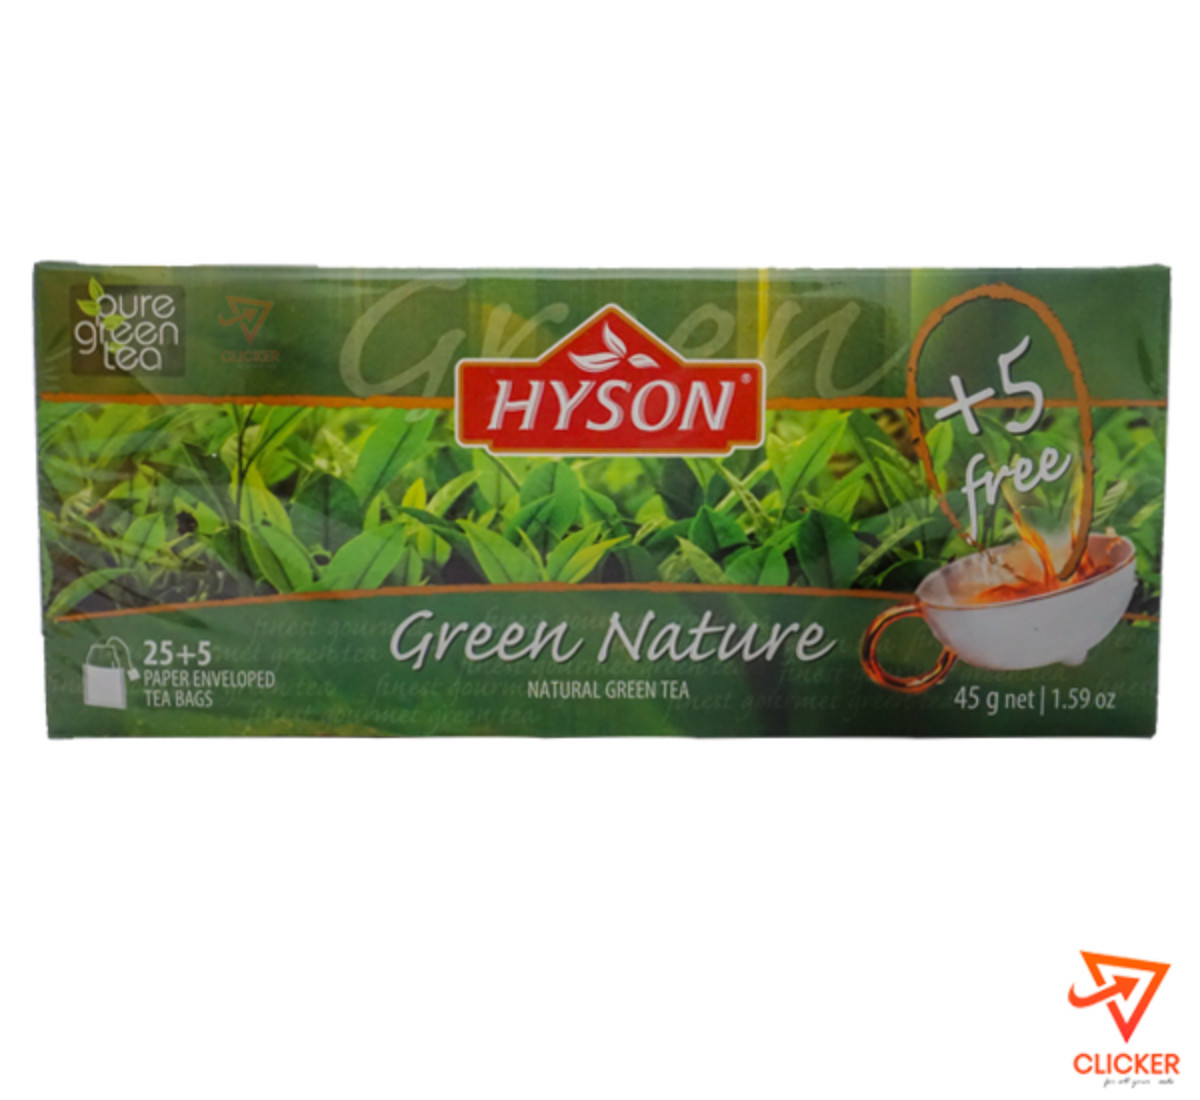 Clicker product 45g HYSON natural green tea(30 tea bags) 953